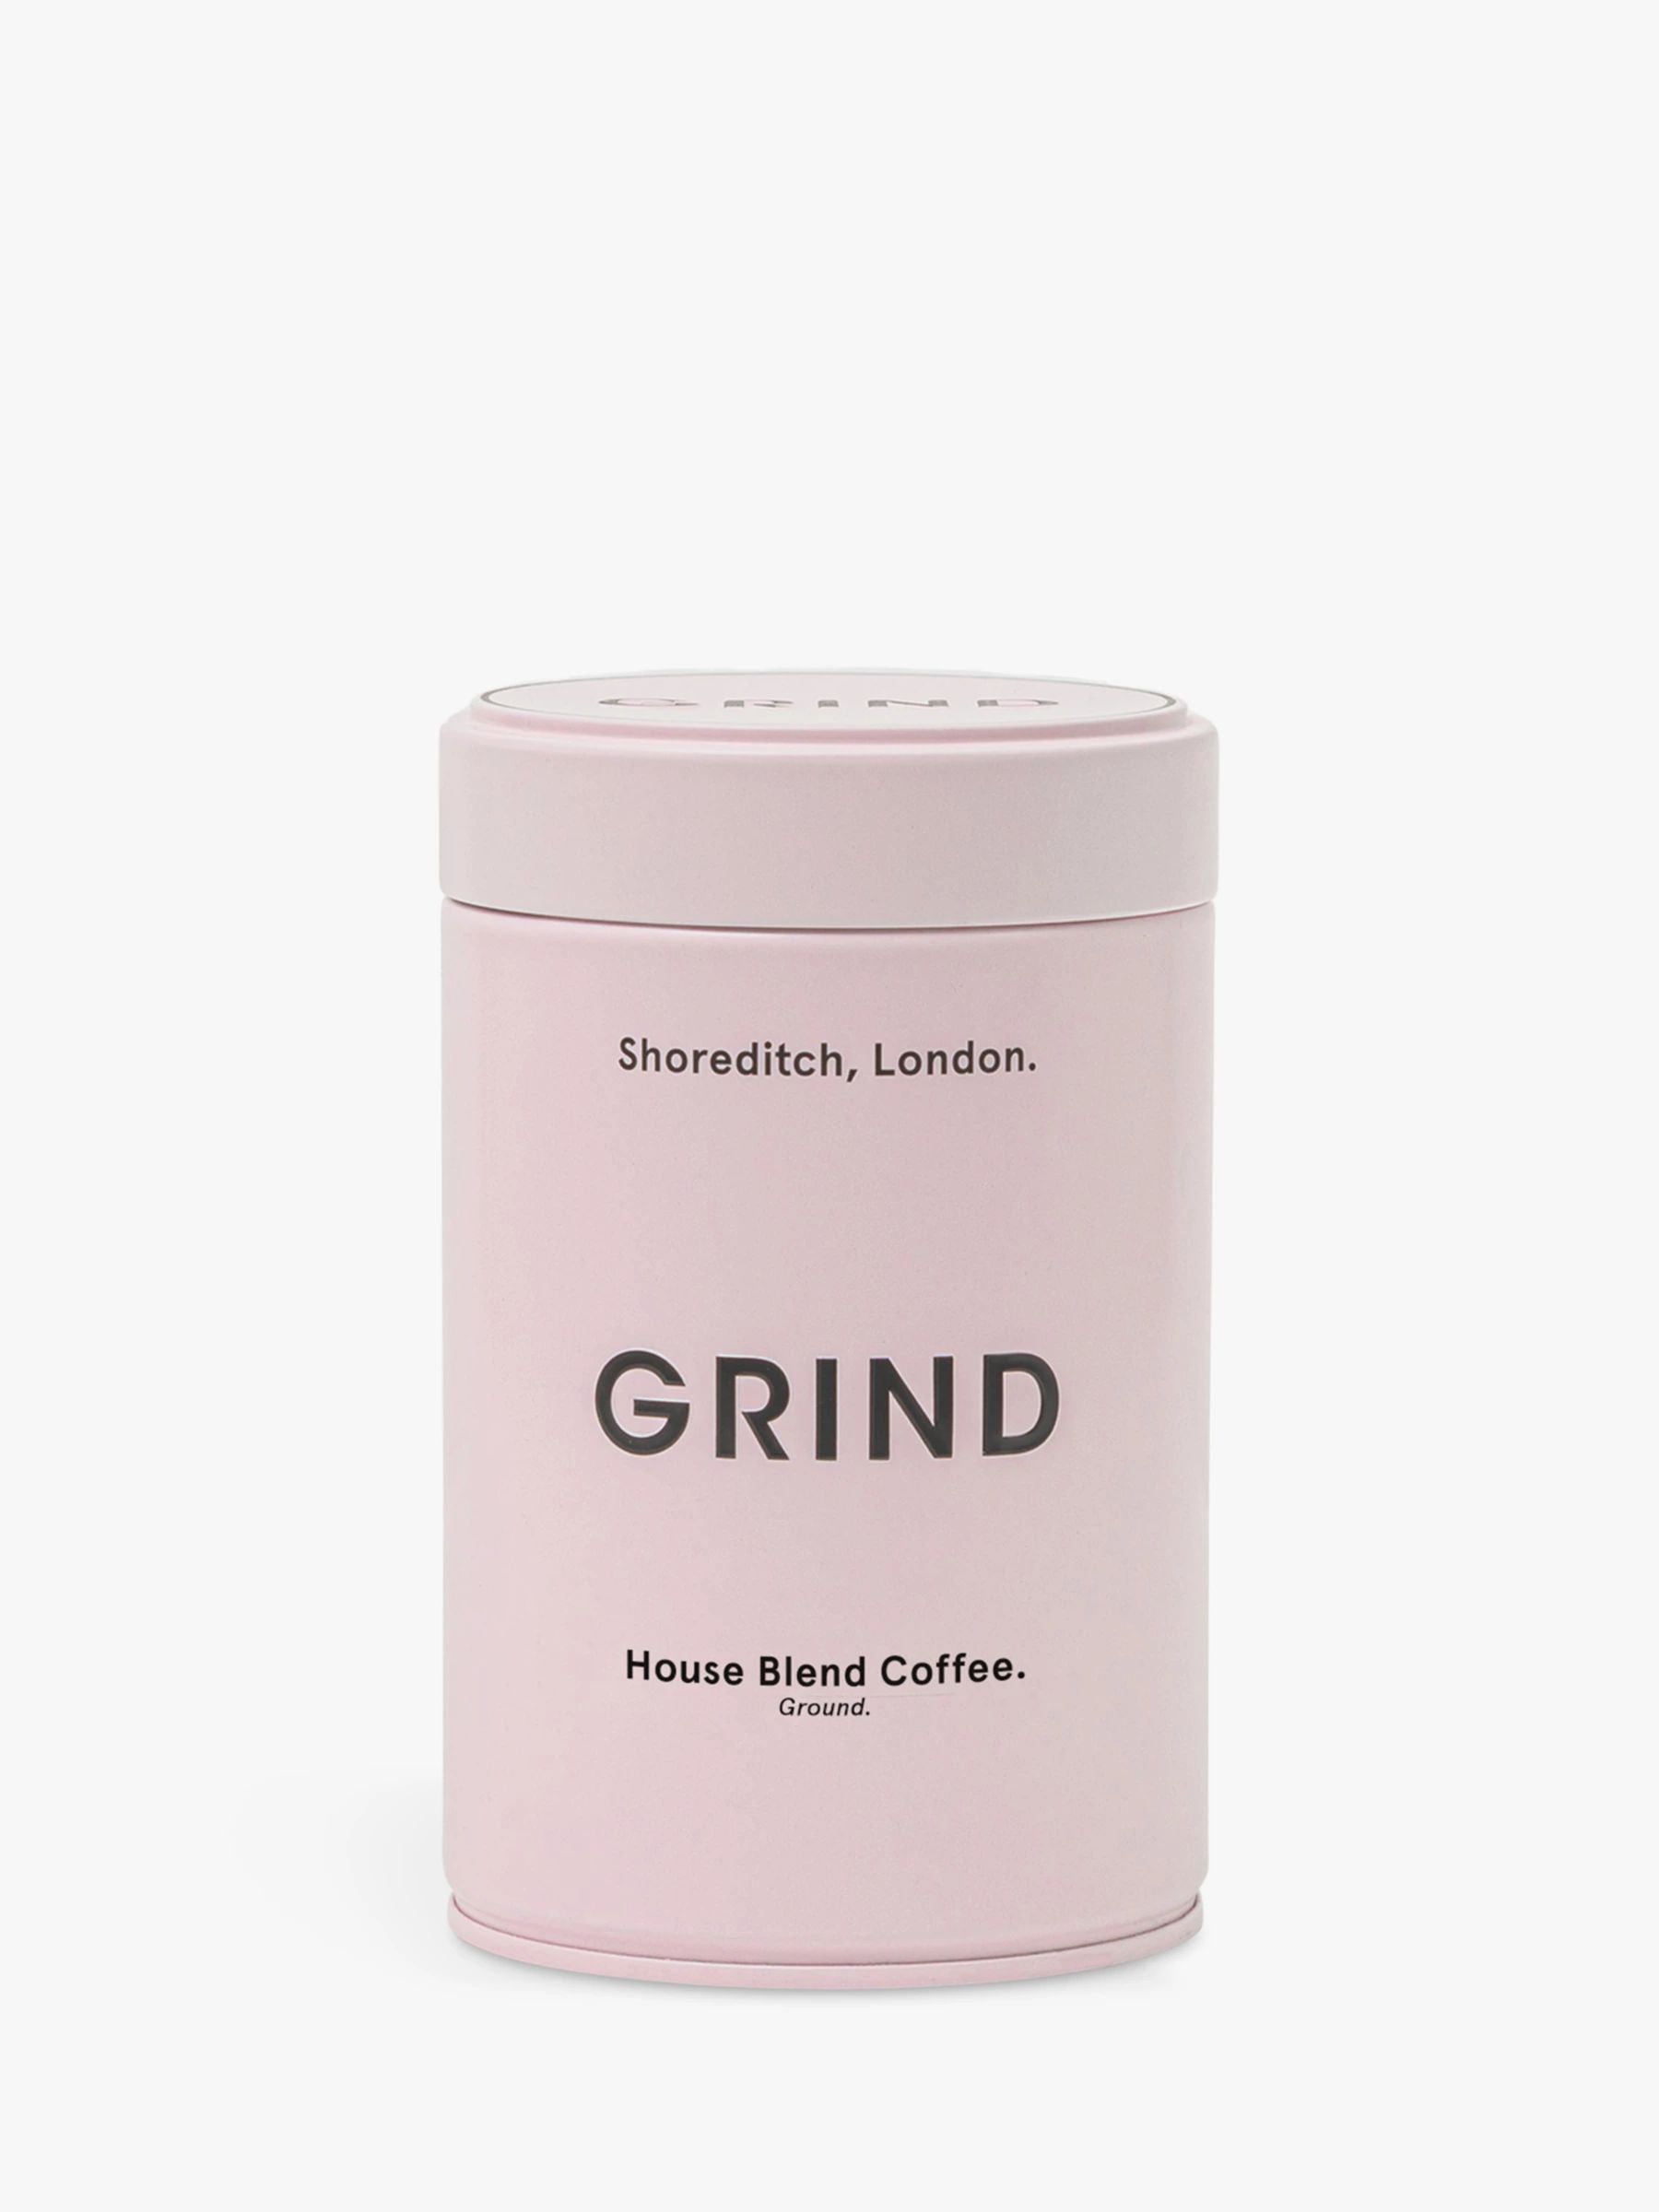 GRIND Ground Coffee, 227g | John Lewis (UK)